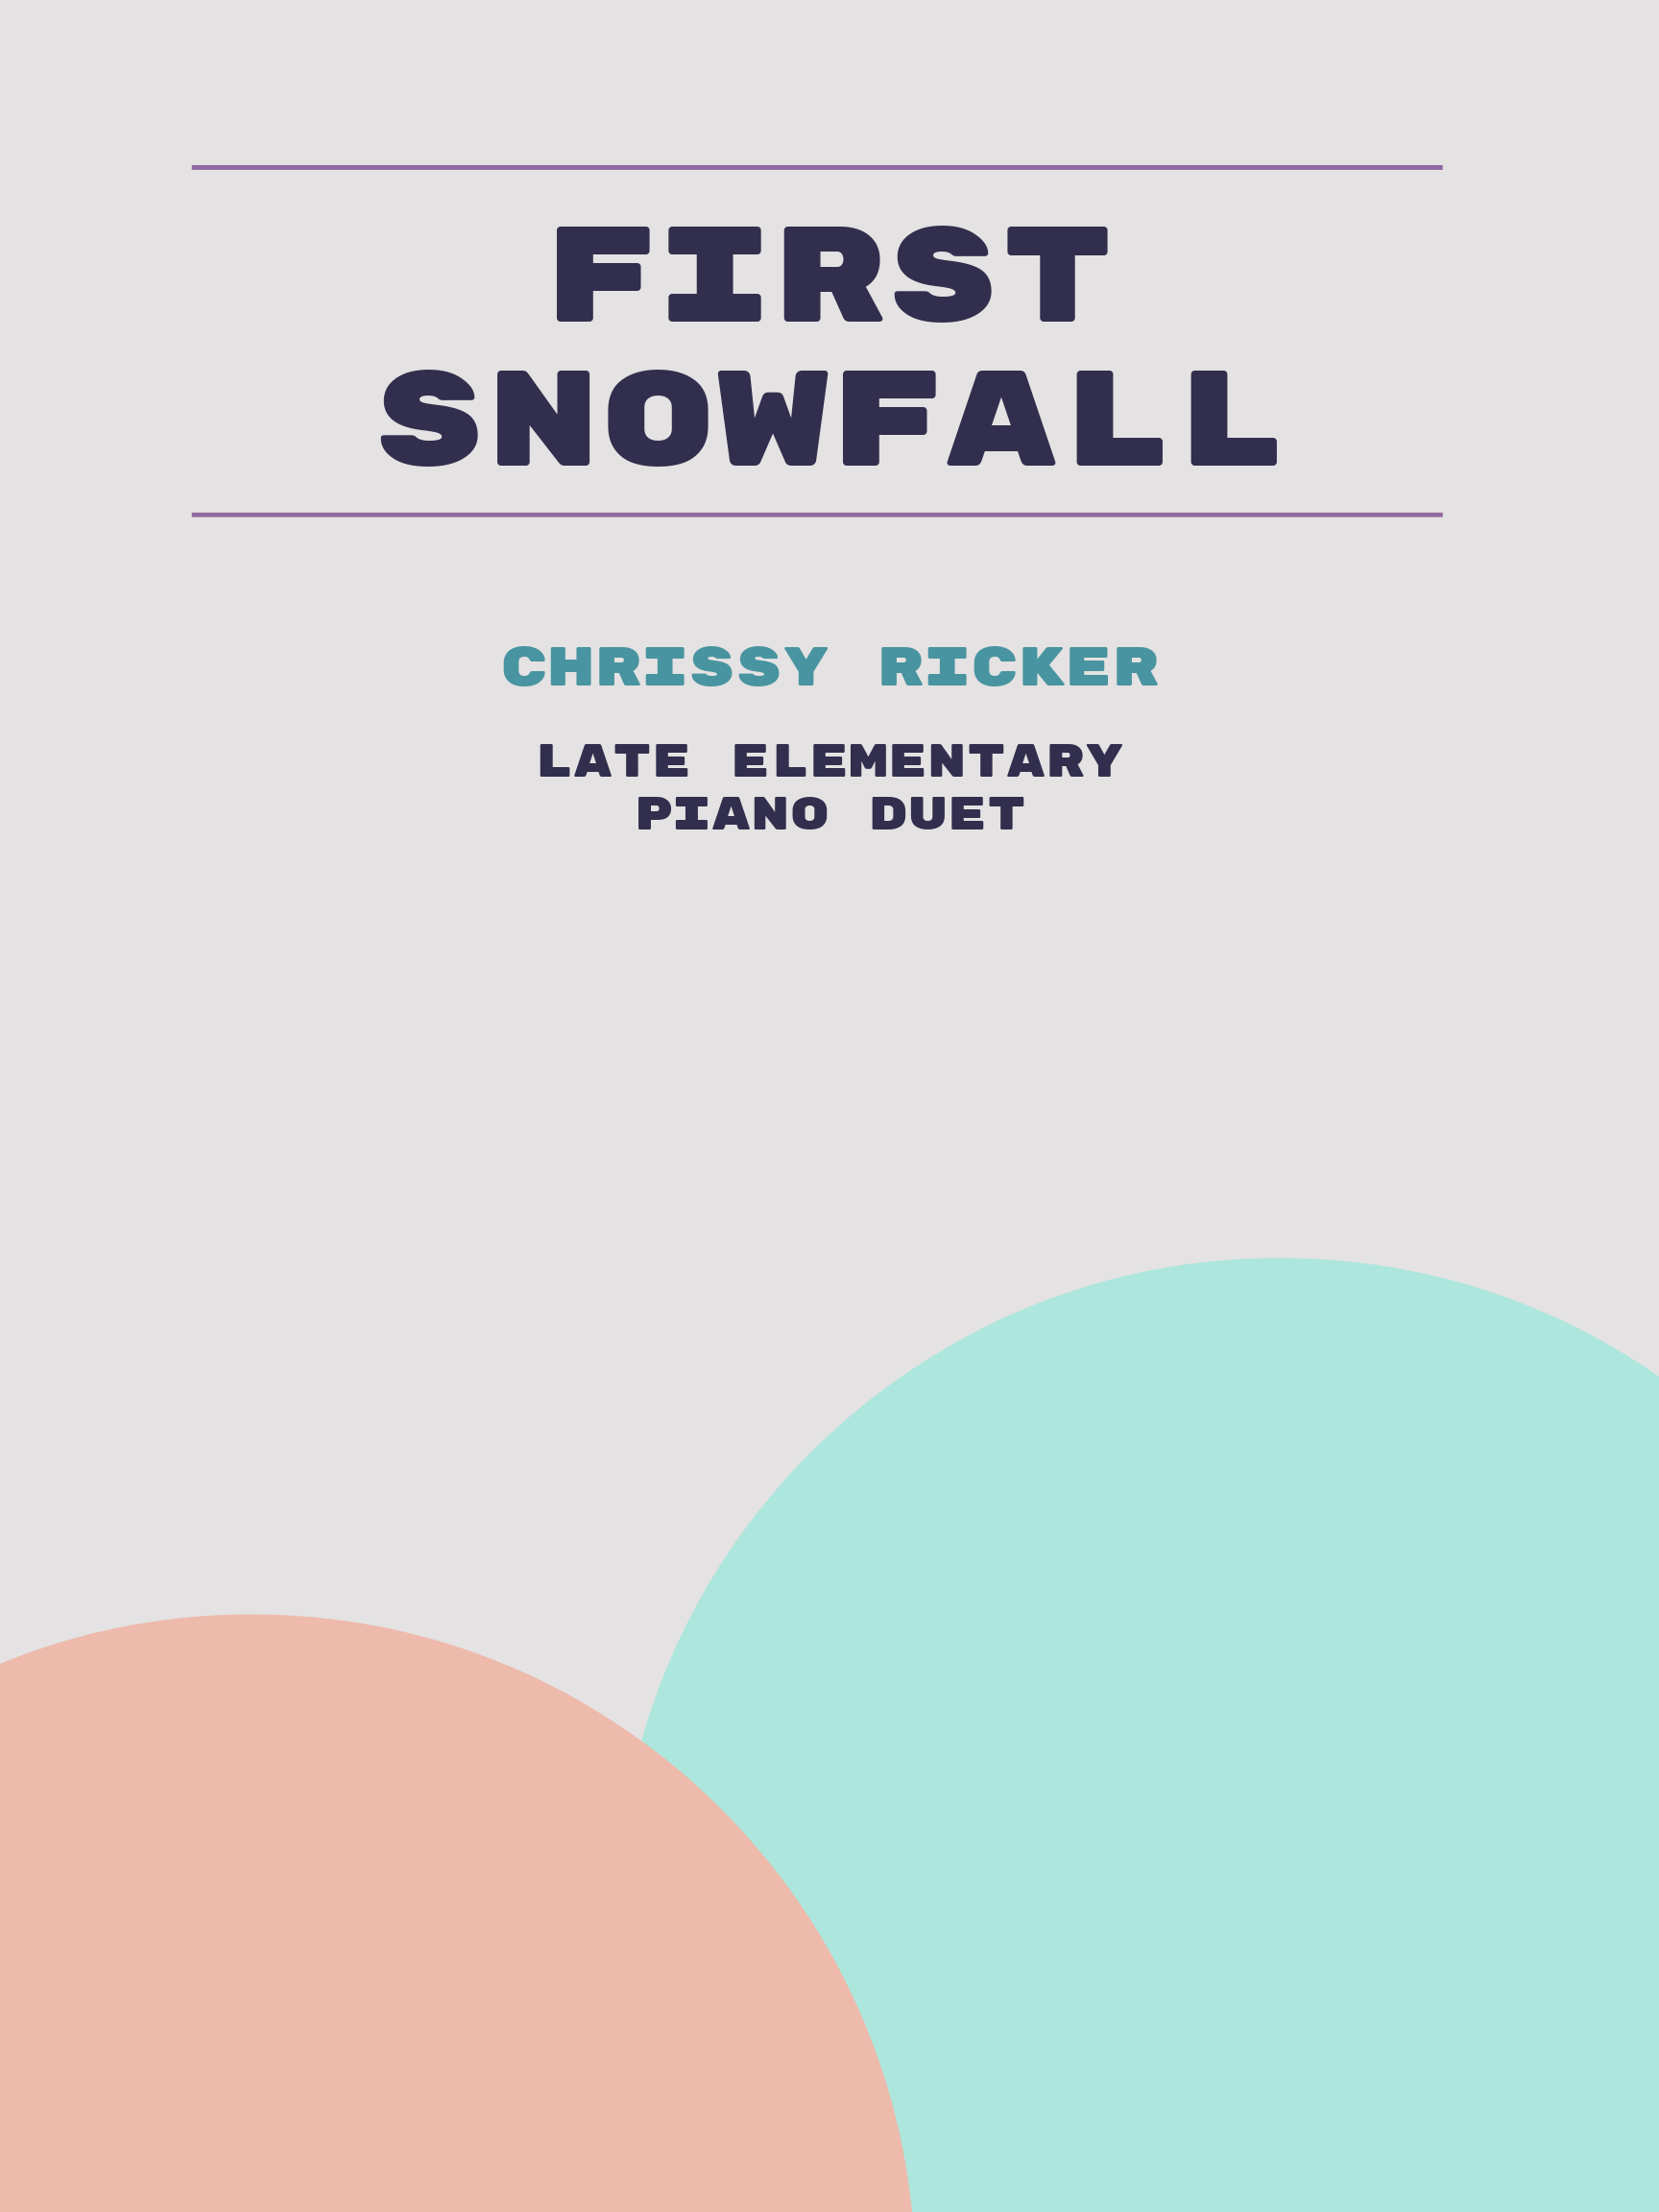 First Snowfall by Chrissy Ricker